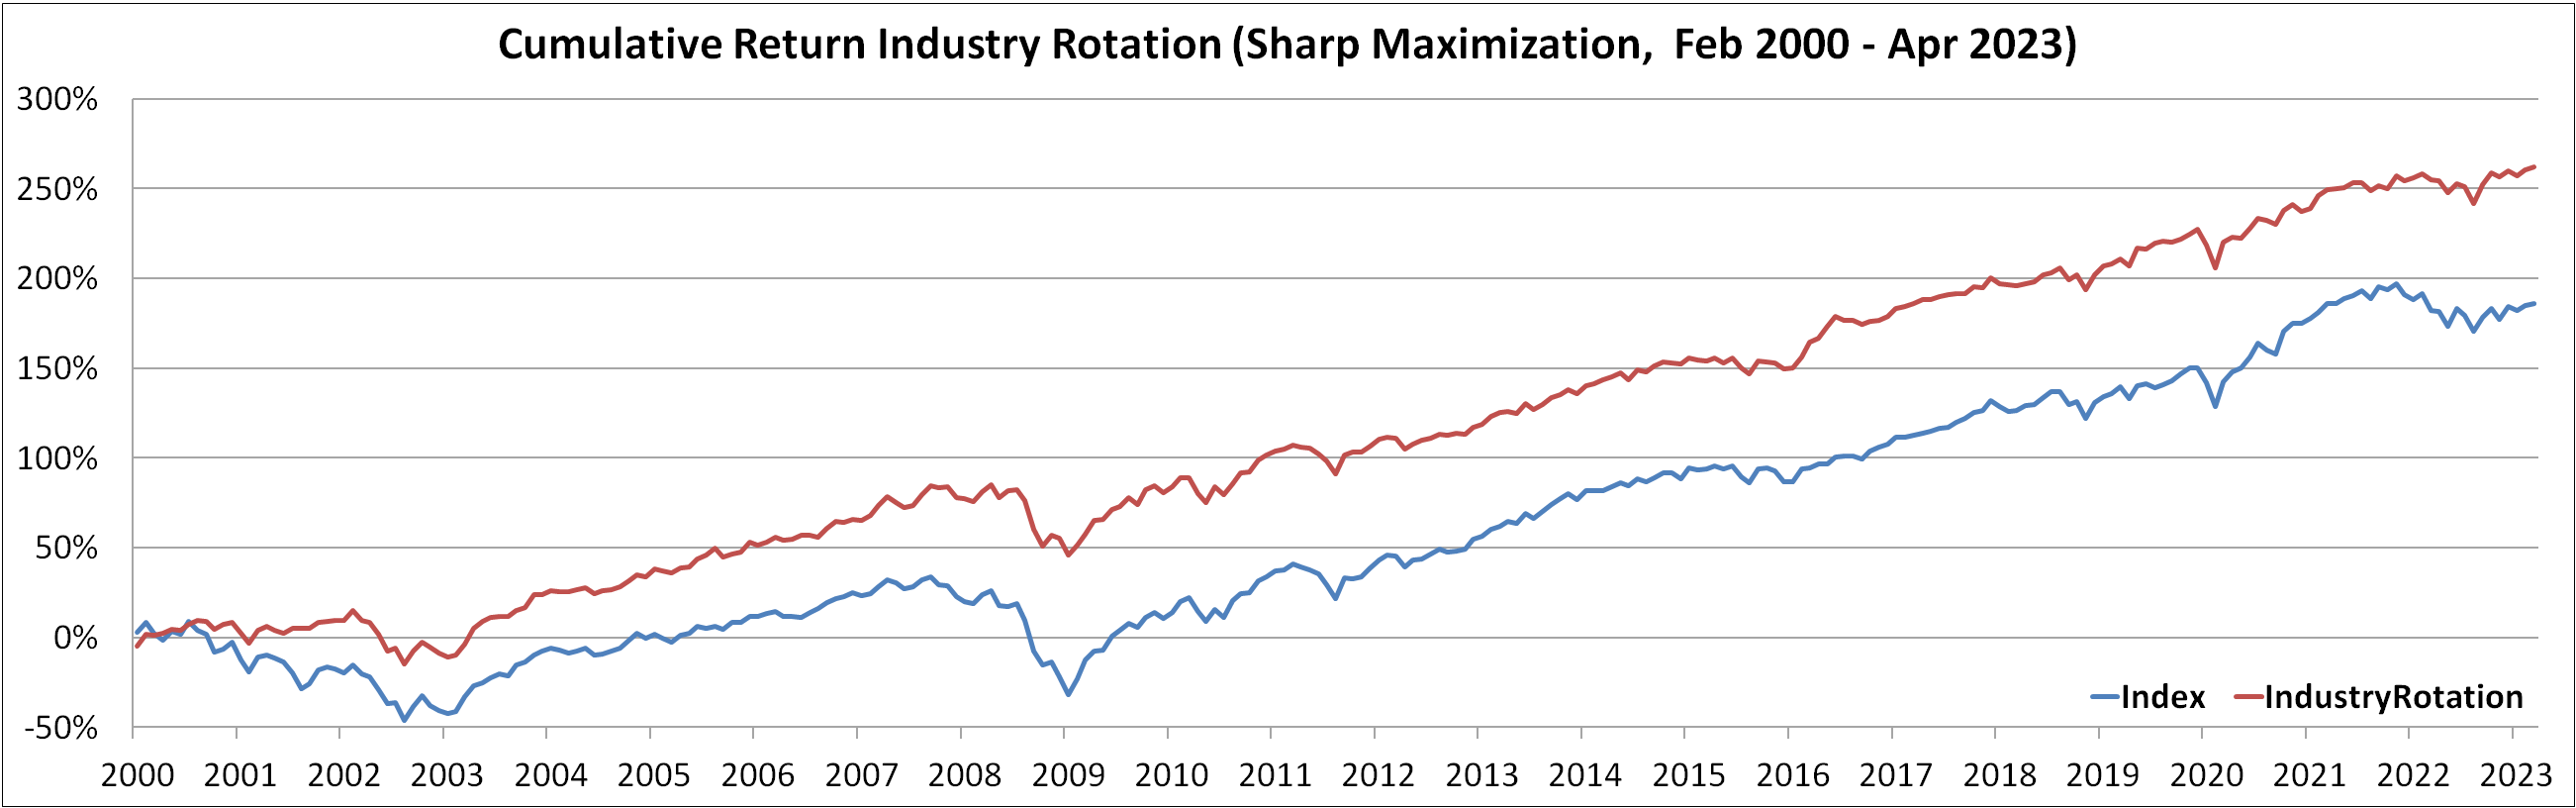 Cumulative Return Industry Rotation Sharp Maximization Feb 2000 - Apr 2023